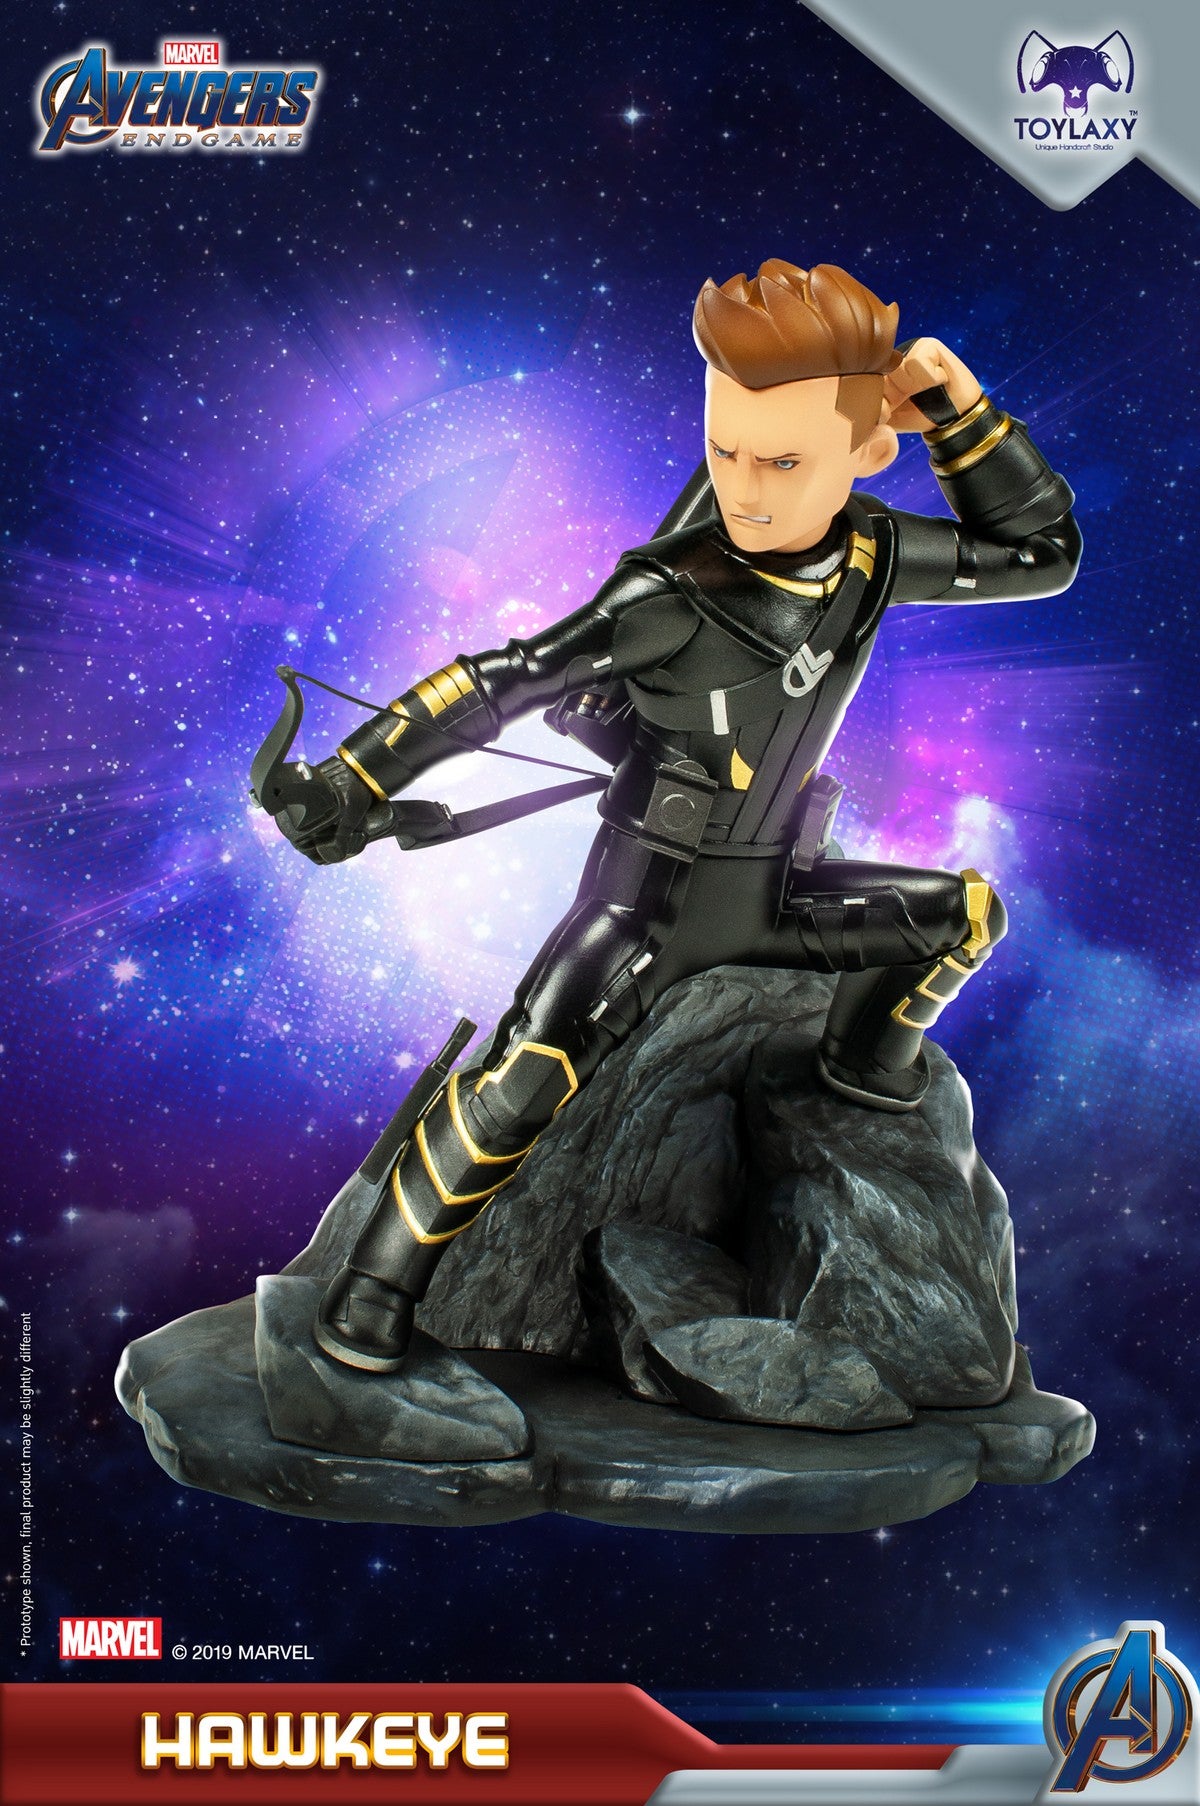 漫威復仇者聯盟：鷹眼正版模型手辦人偶玩具 Marvel's Avengers: Endgame Premium PVC Hawkeye official figure toy mini